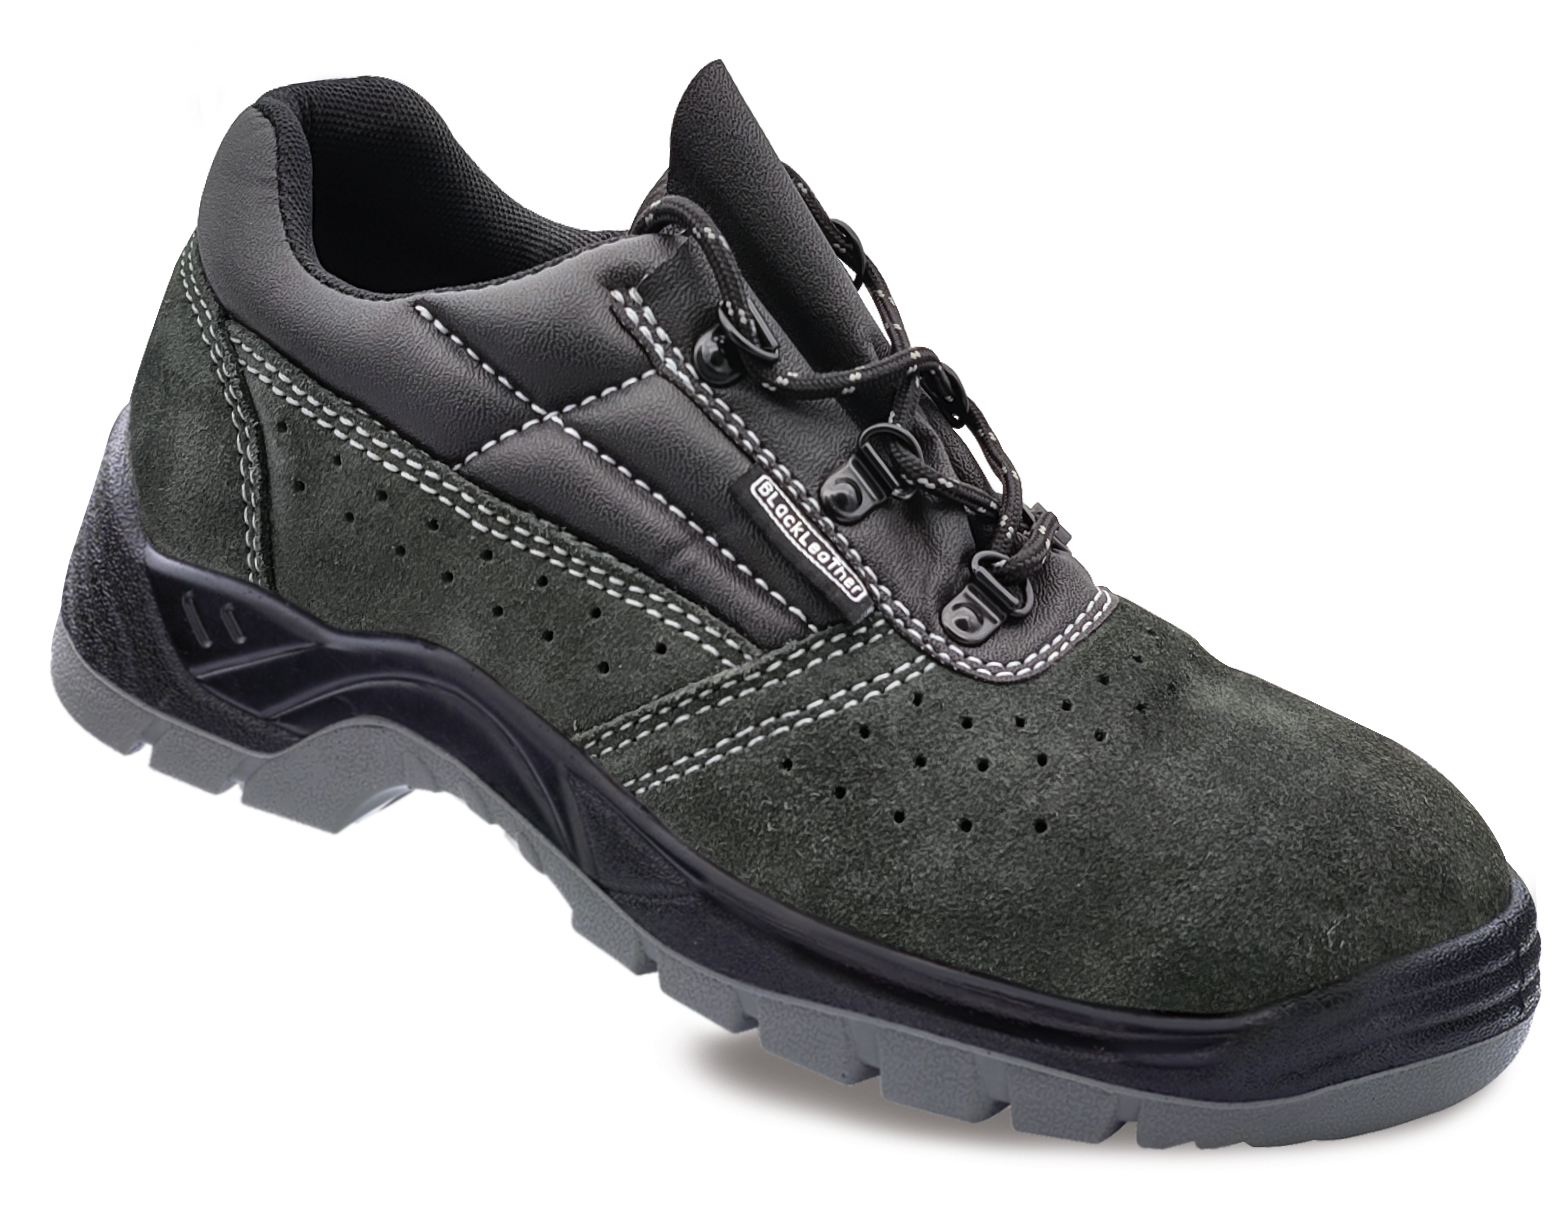 ZSECO1 Safety Footwear BlackLeather Zapato mod. ZSECO1 (S1P SRC E A)